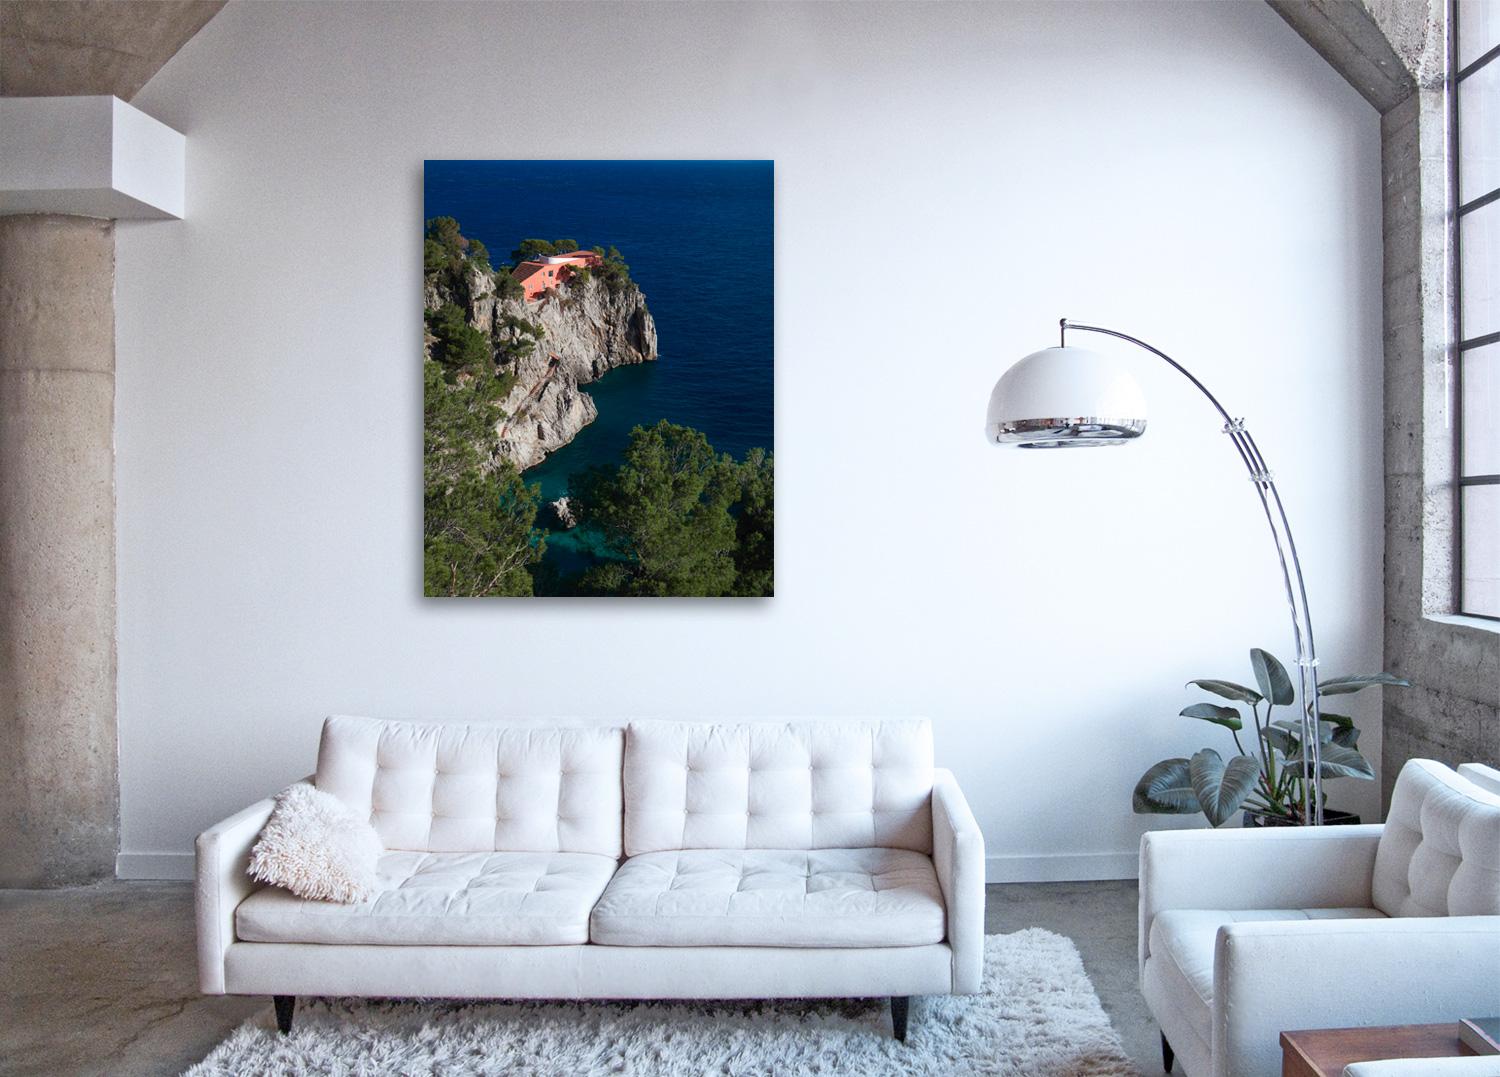 Casa Malaparte - large photograph of iconic Mediterranean villa on Capri Island - Photograph by Frank Schott